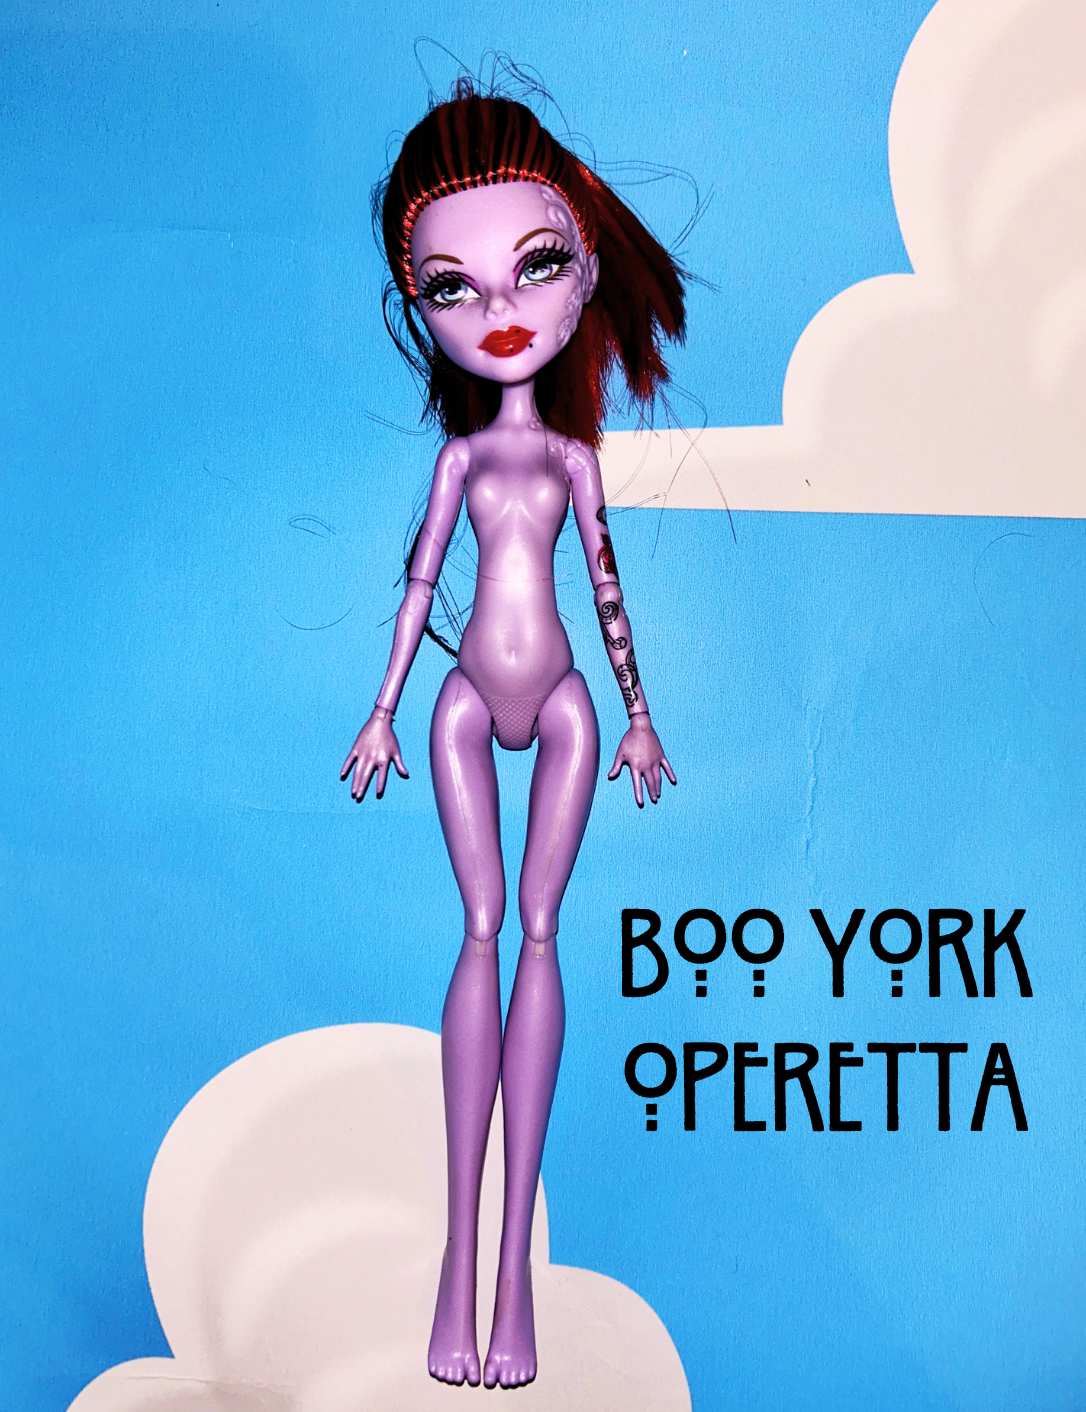 Boo York Operetta